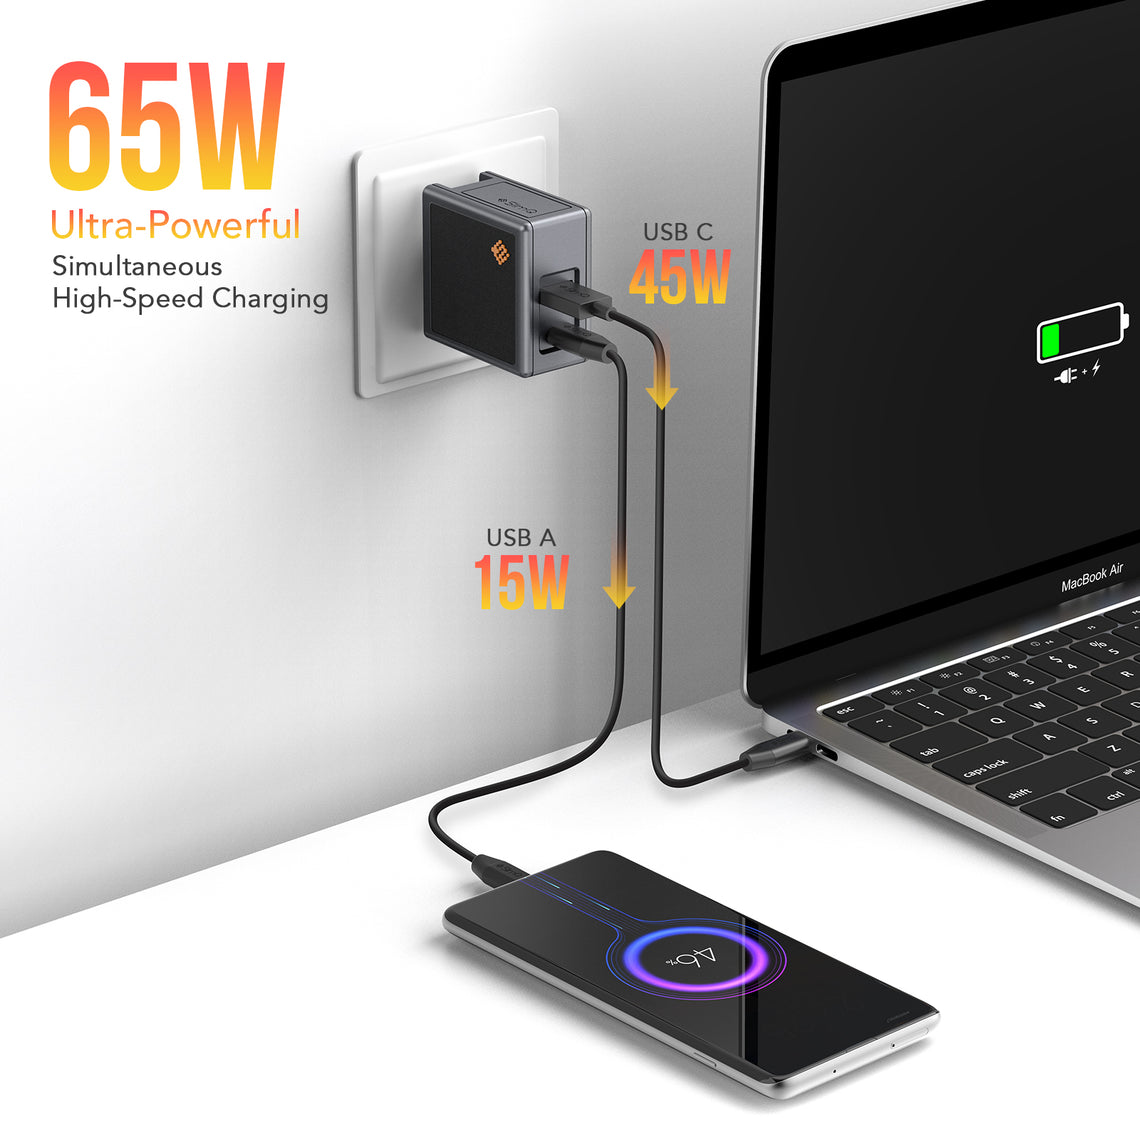 65W USB-C 氮化鎵充電器